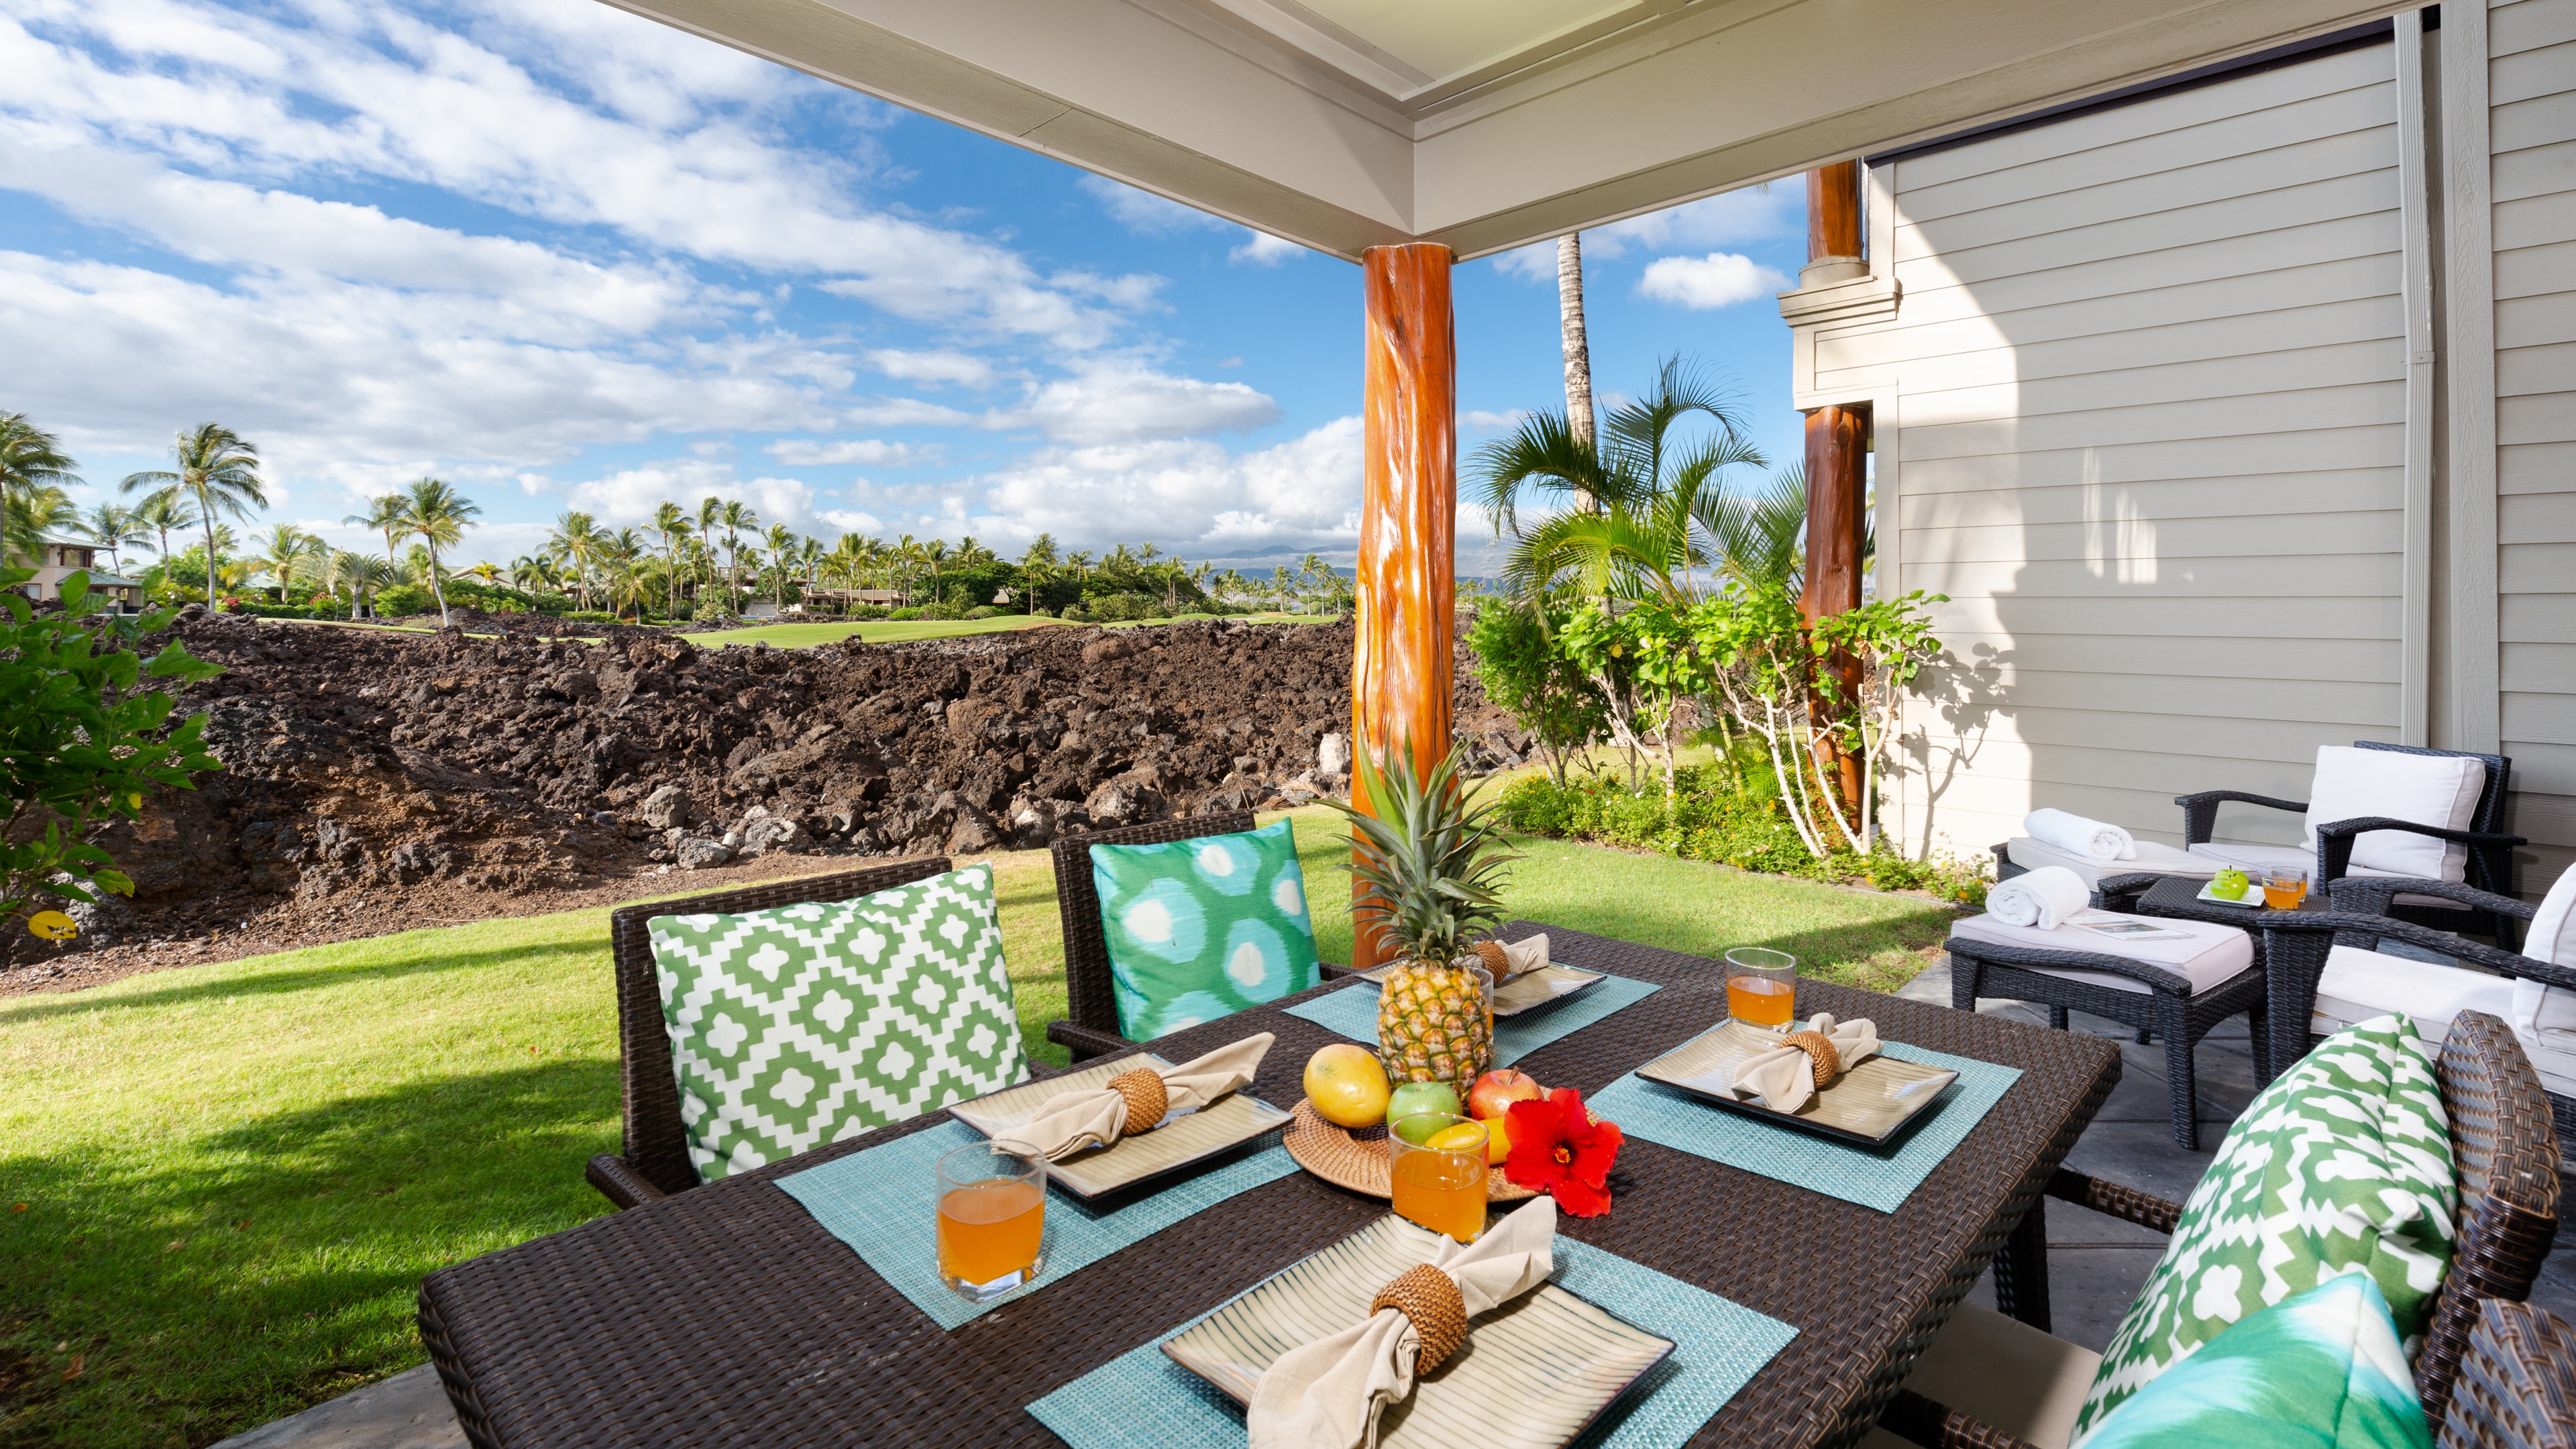 Welcome to Hawaii Blue Villa in the beautiful Golf Villas at Mauna Lani community.